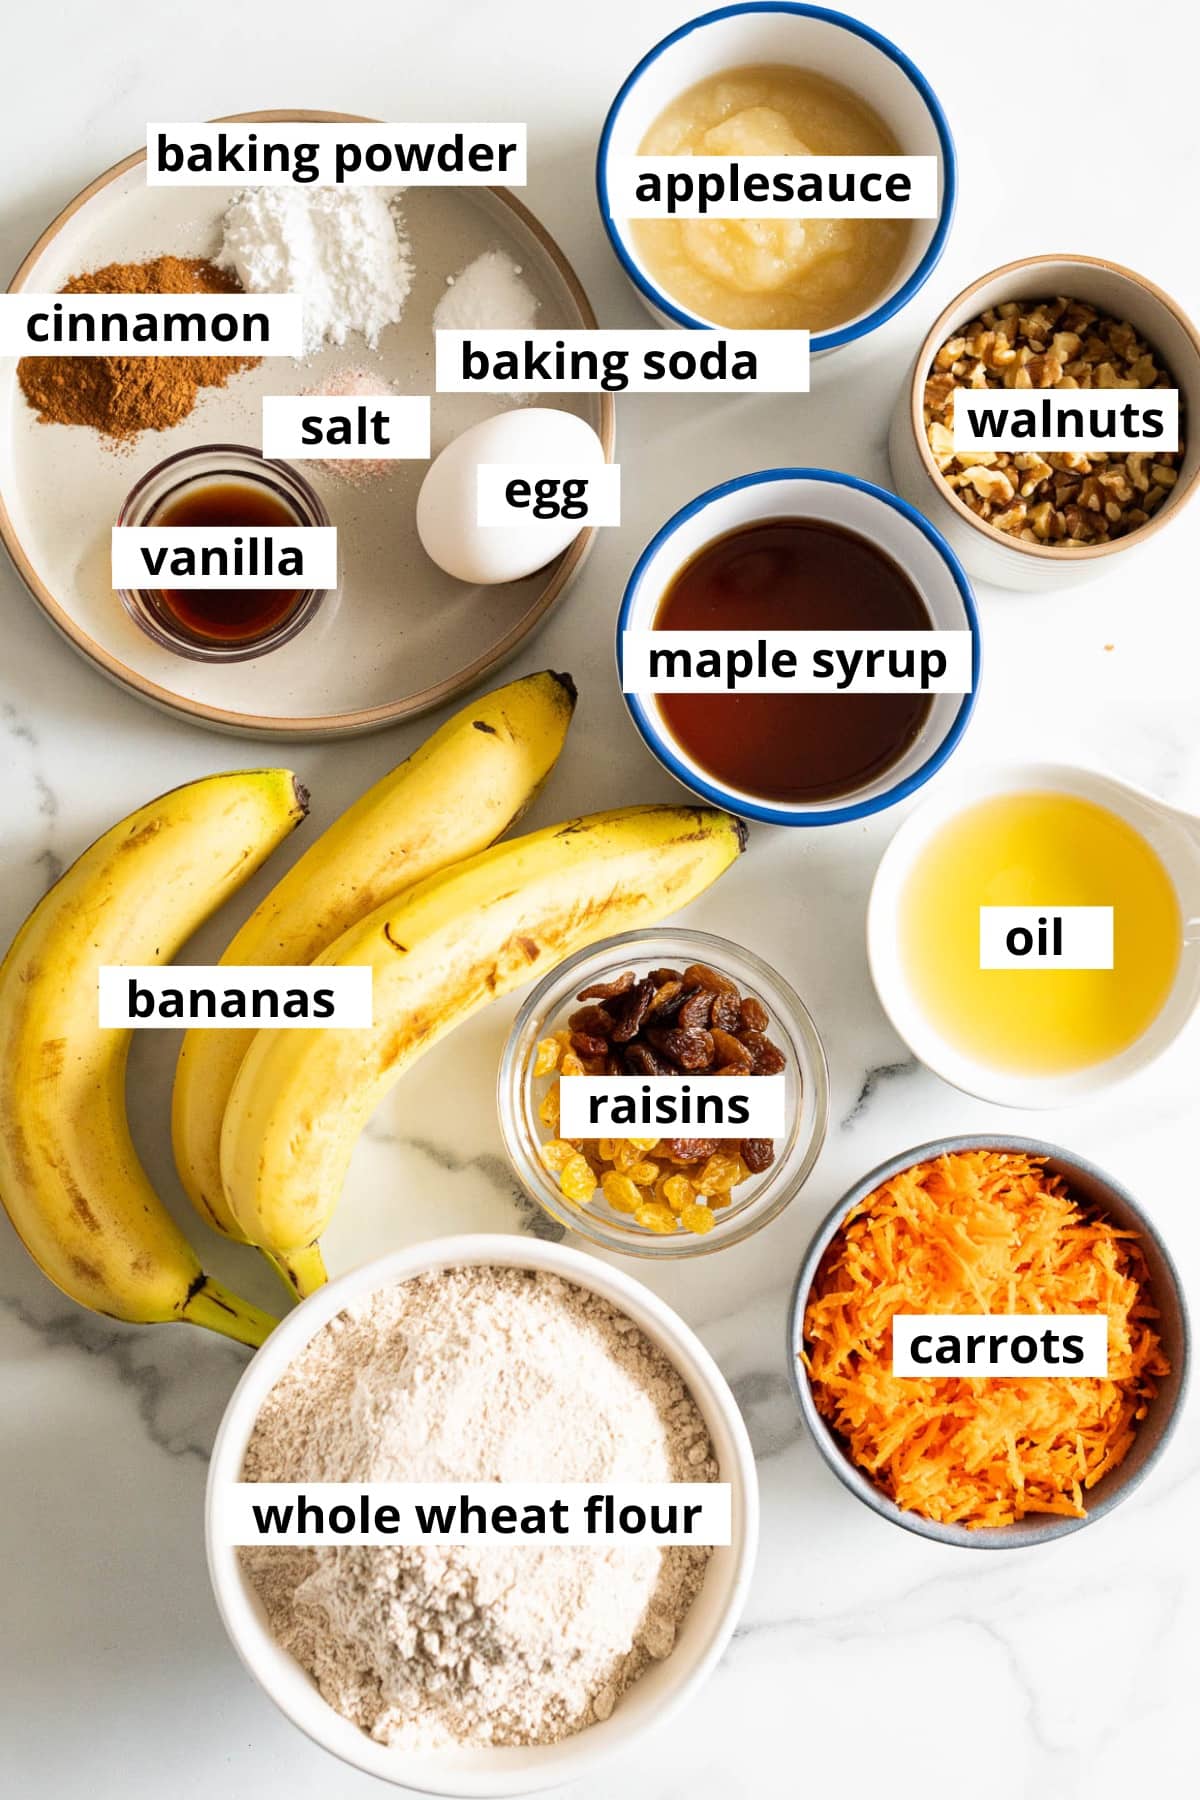 Bananas, shredded carrots, whole wheat flour, raisins, oil, maple syrup, walnuts, applesauce, egg, vanilla, baking soda, baking powder, cinnamon, salt.